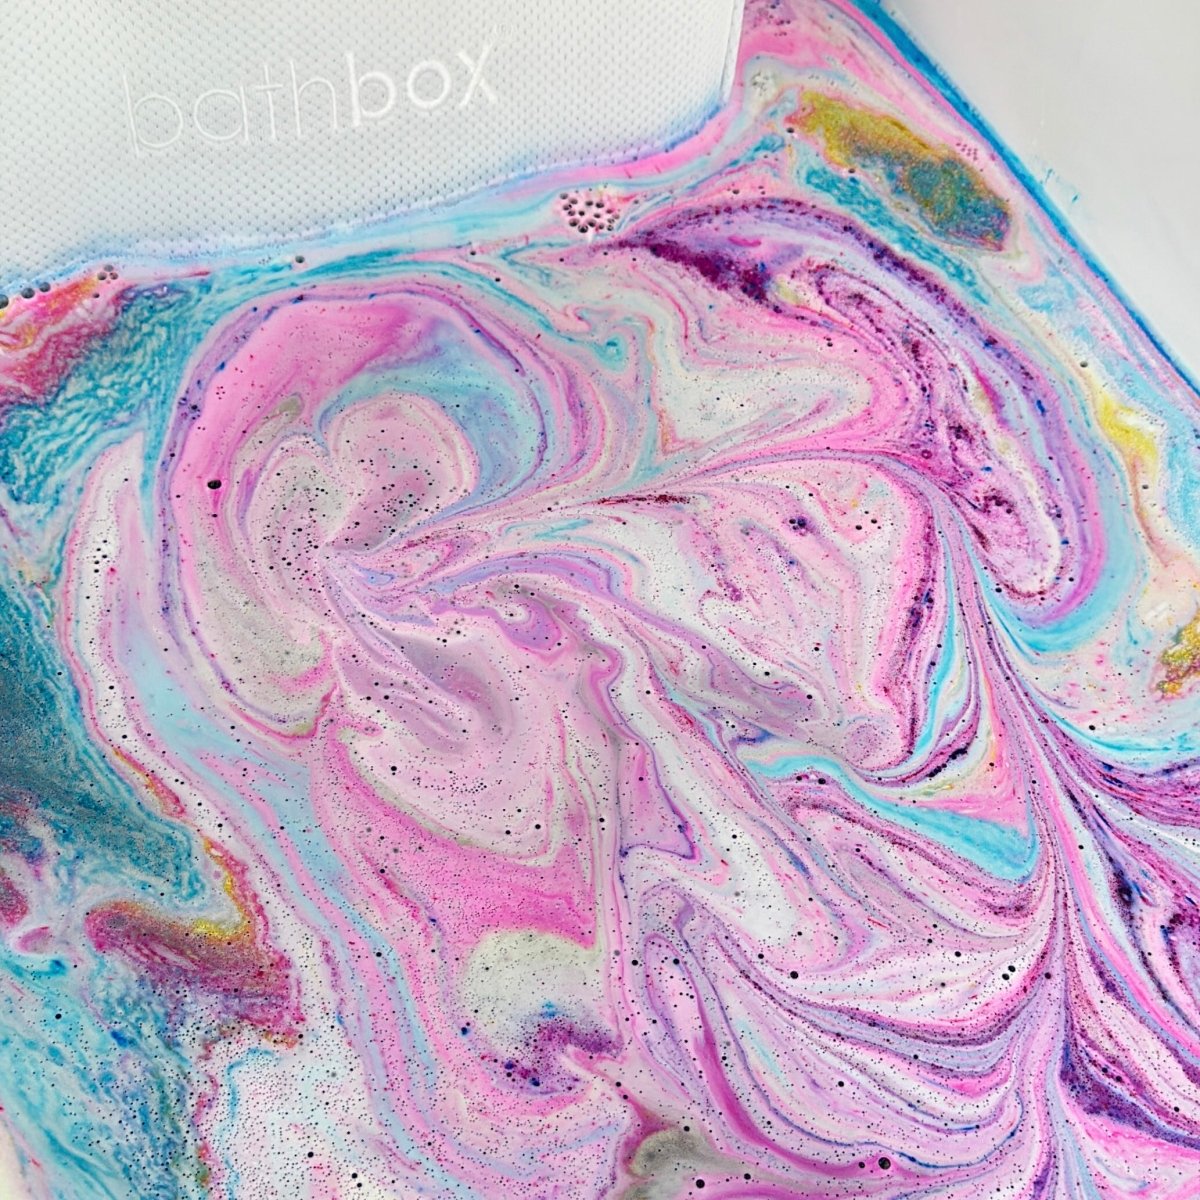 6-Pack Bath Gift Set of Large Kids Colourful Bath Art Bath Bombs - Made in Australia by Bath Box